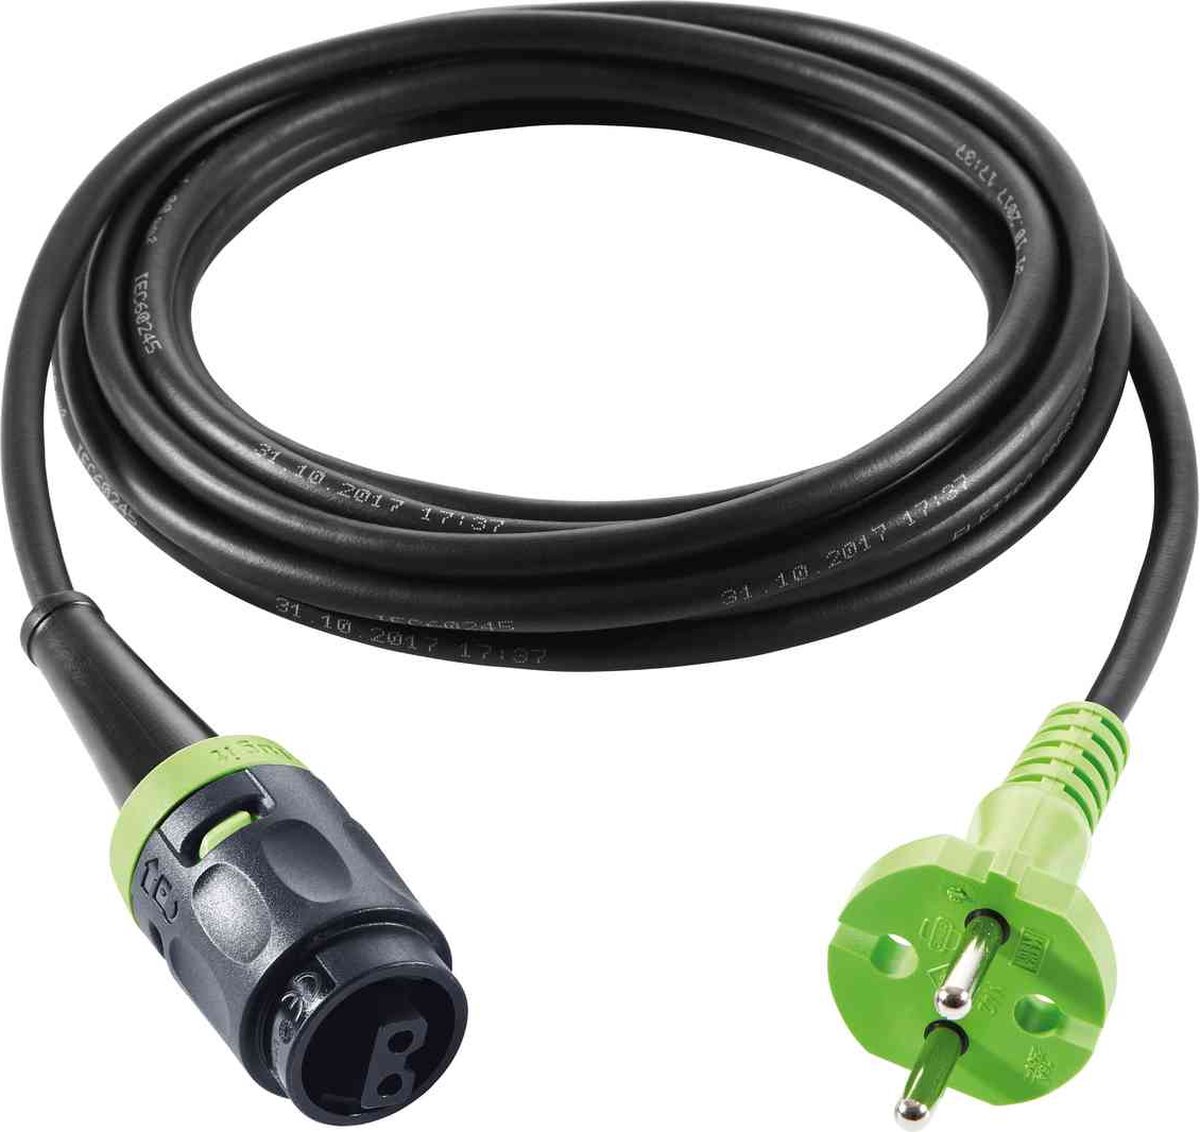 Festool 203920 H05 RN-F/7,5 Plug-it kabel voor festool machines - 7,5m |  bol.com